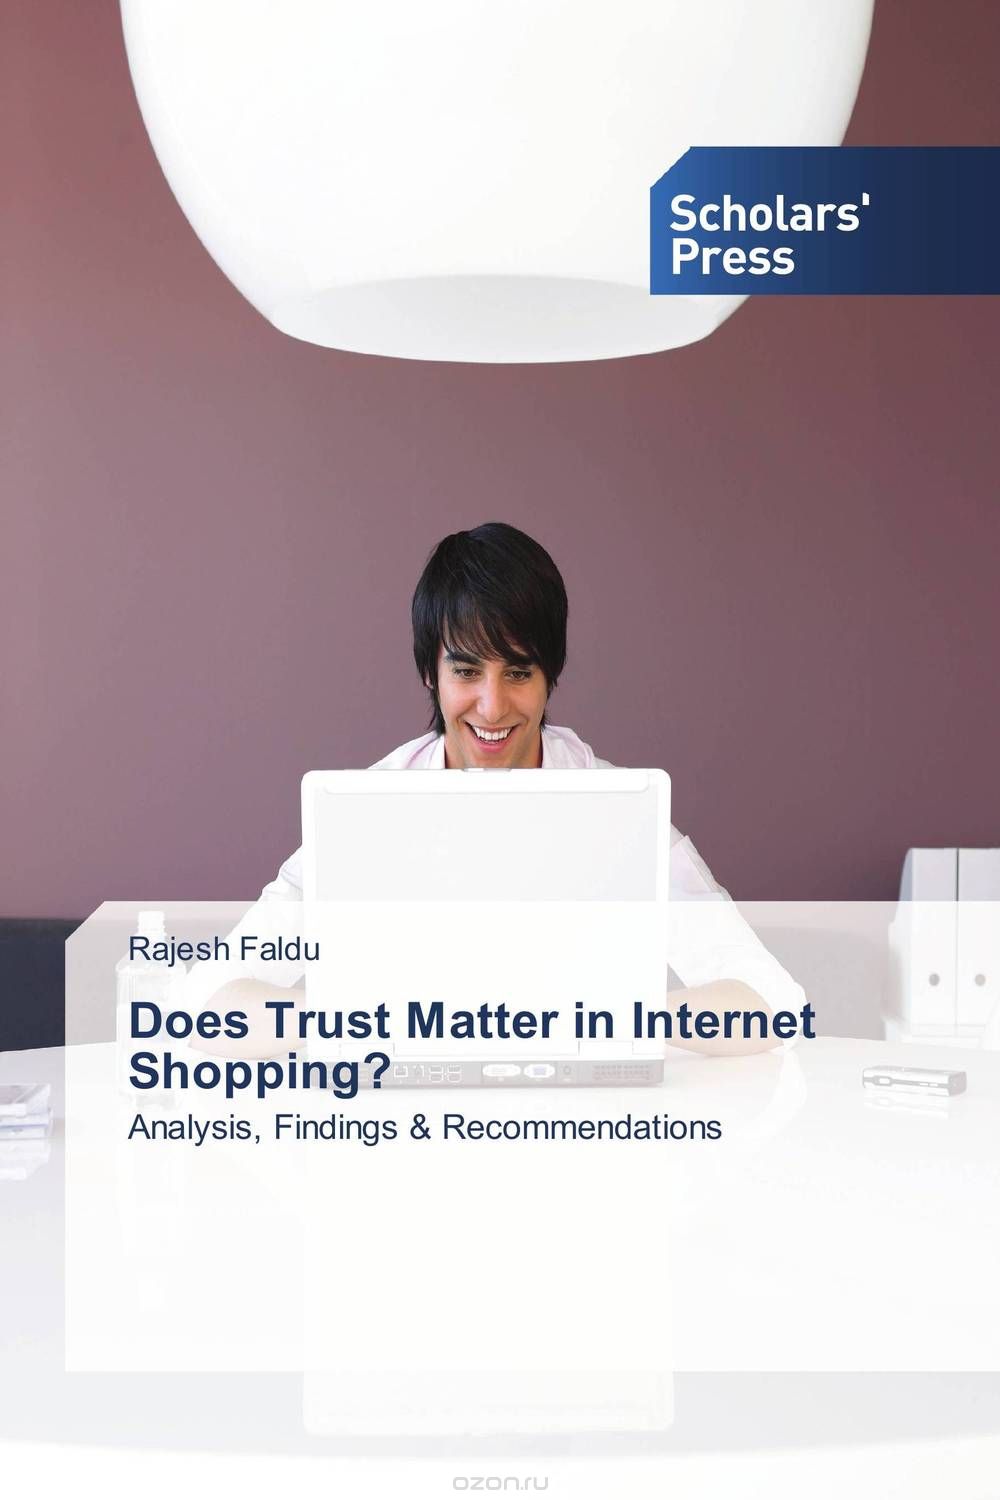 Скачать книгу "Does Trust Matter in Internet Shopping?"